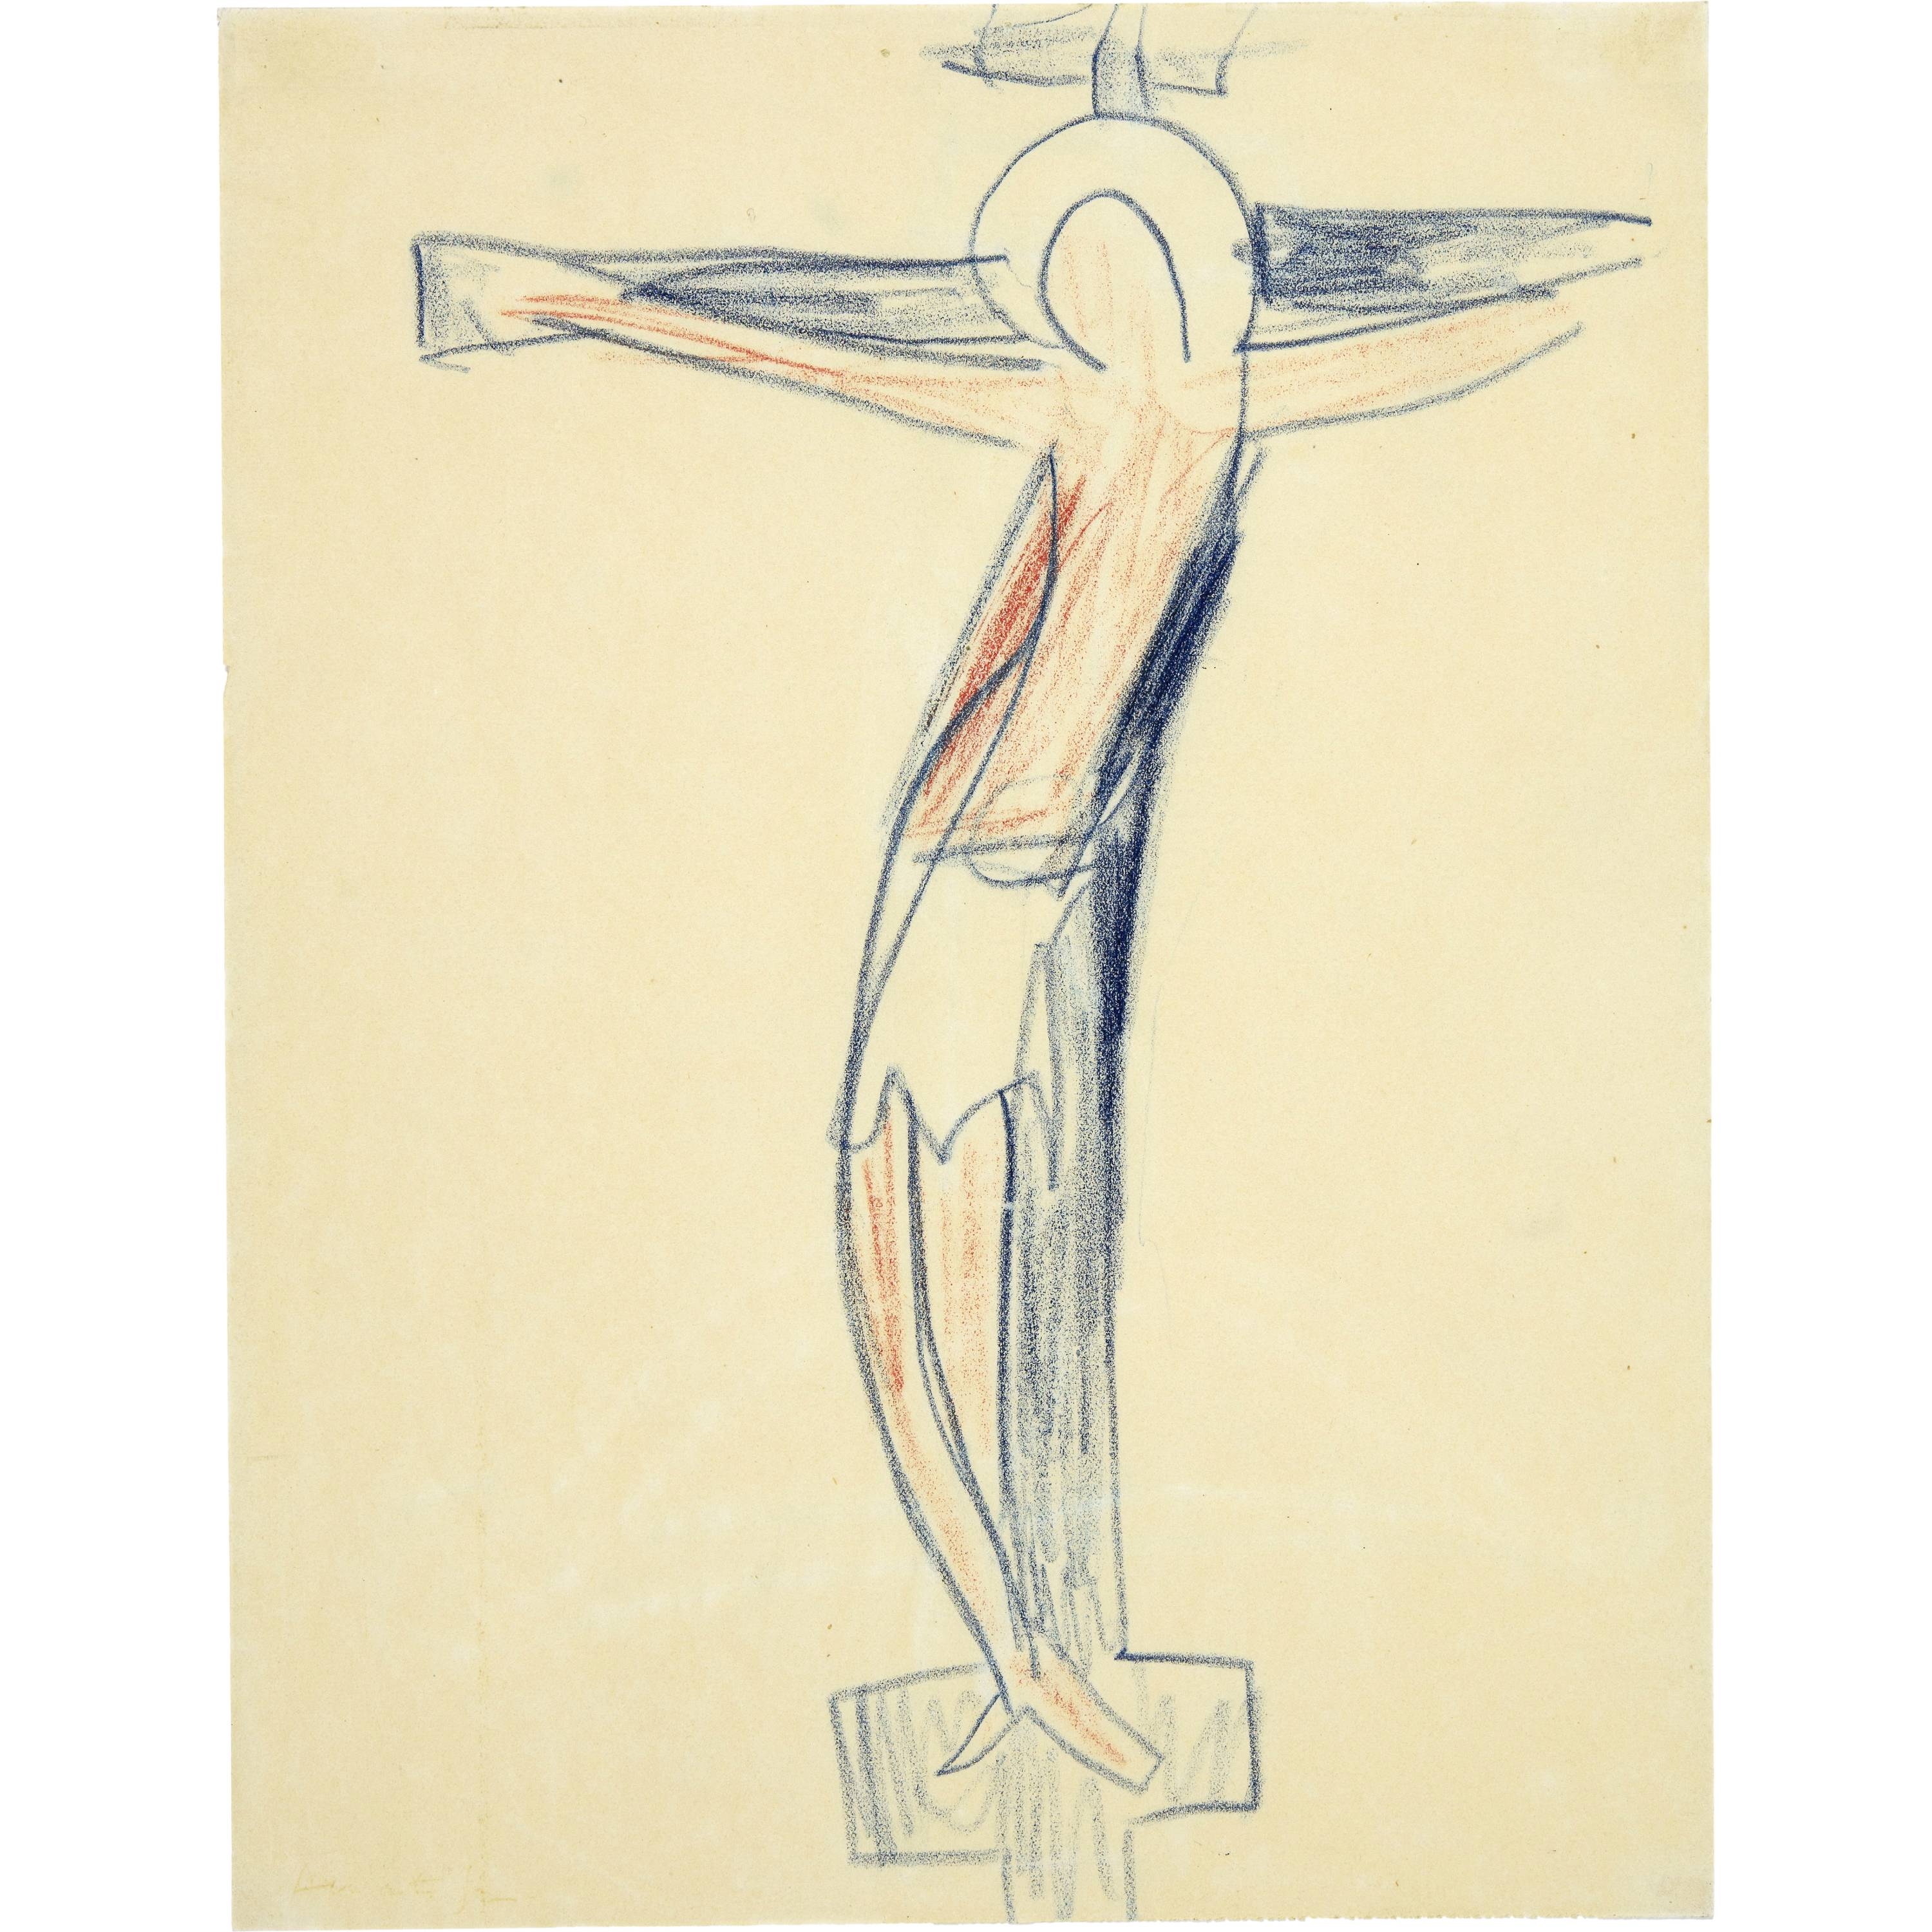 Linocut de Henri Matisse, La Lance on Amorosart